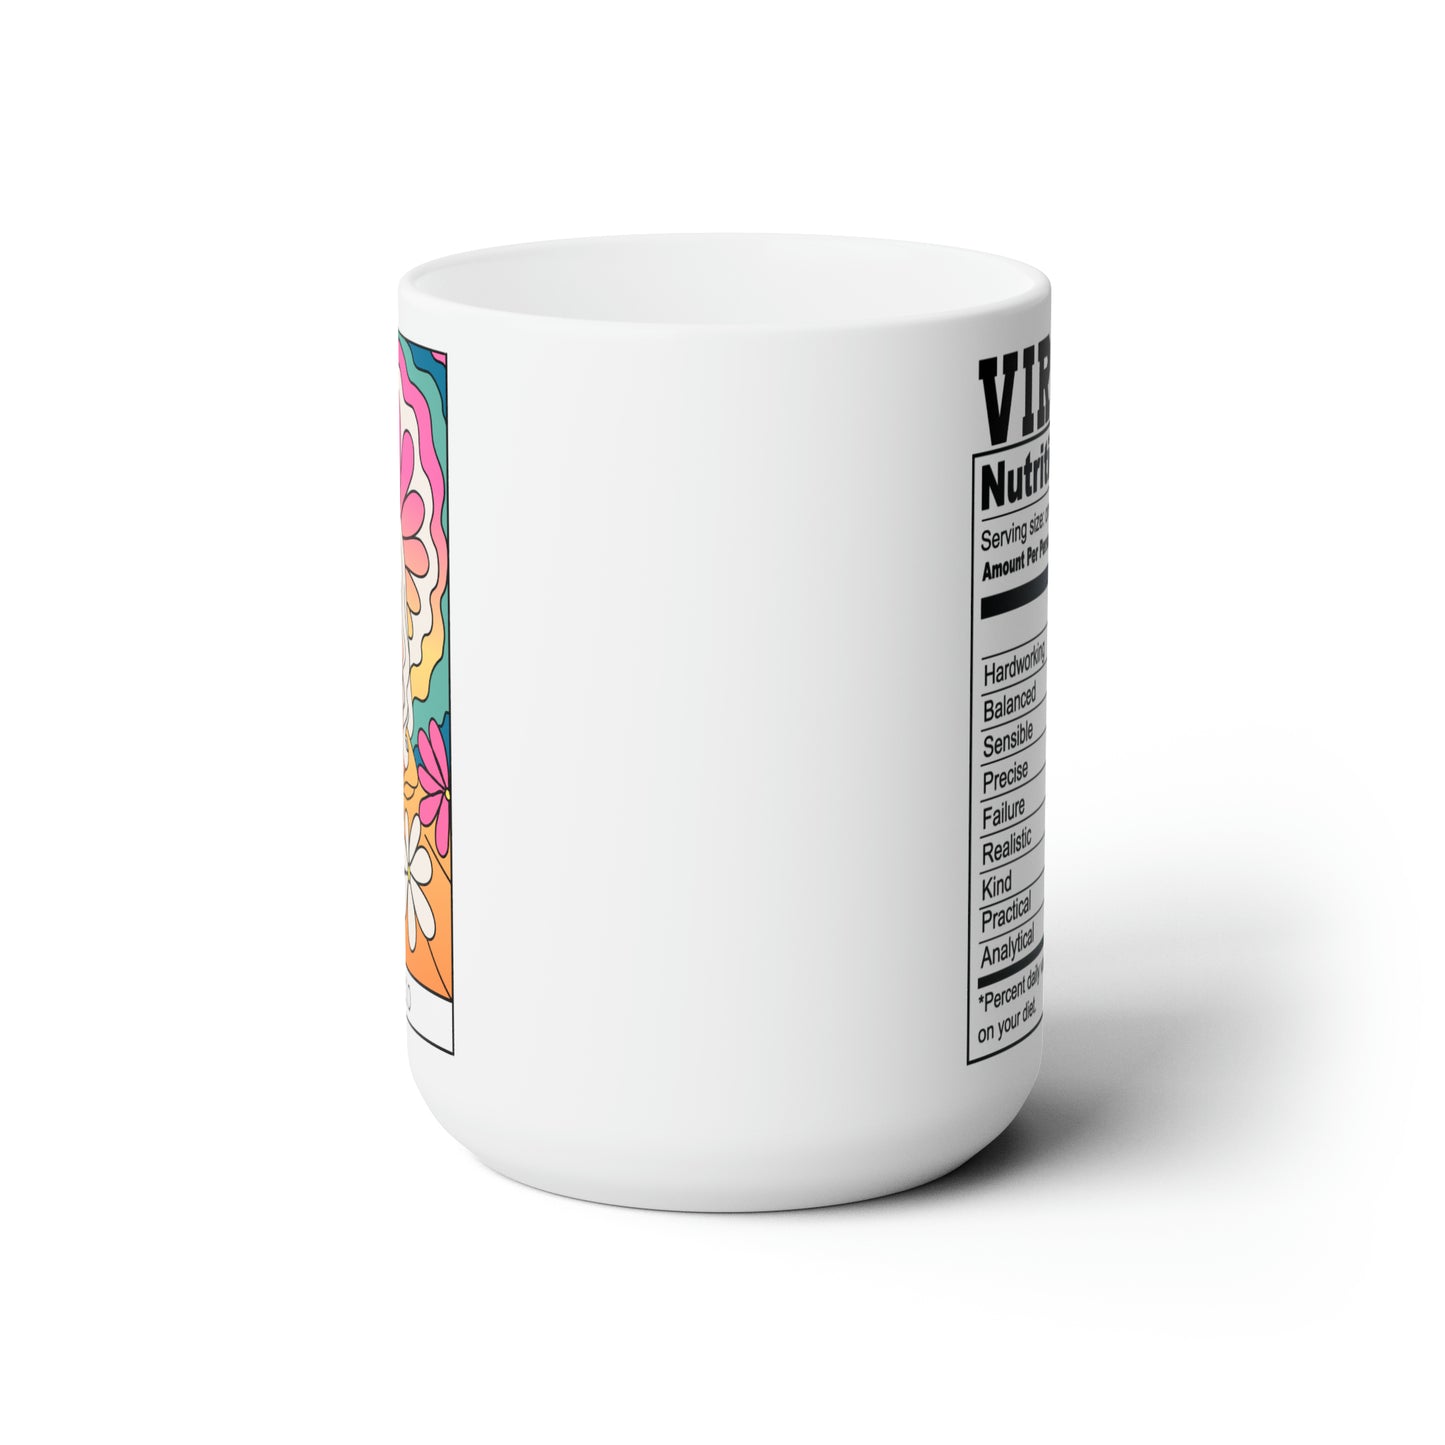 Virgo Tarot Card Coffee Mug - Double Sided White Ceramic 15oz - by TheGlassyLass.com